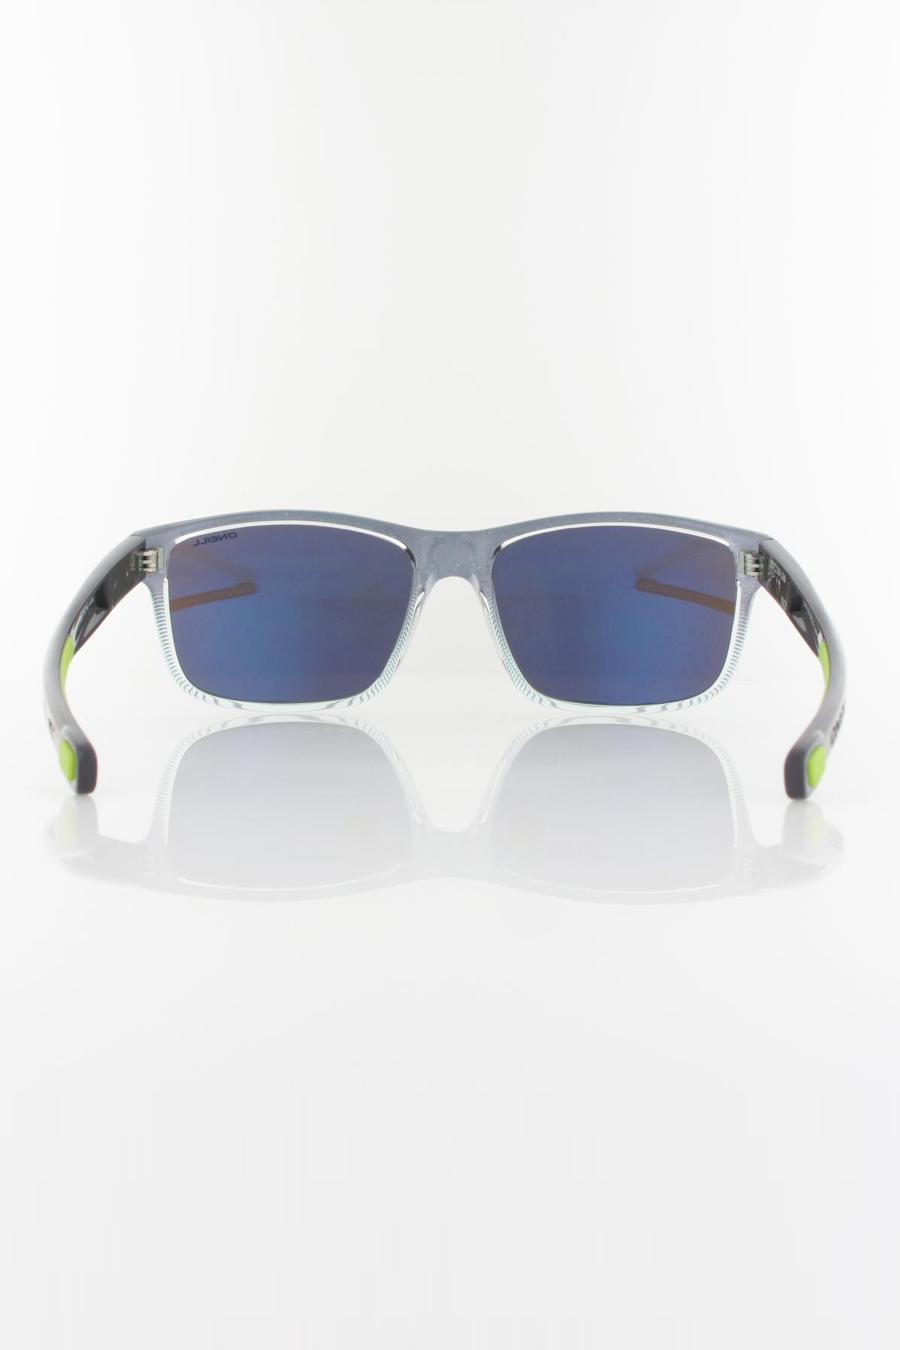 Sunglasses ONEILL ONS-CONVAIR20-108P